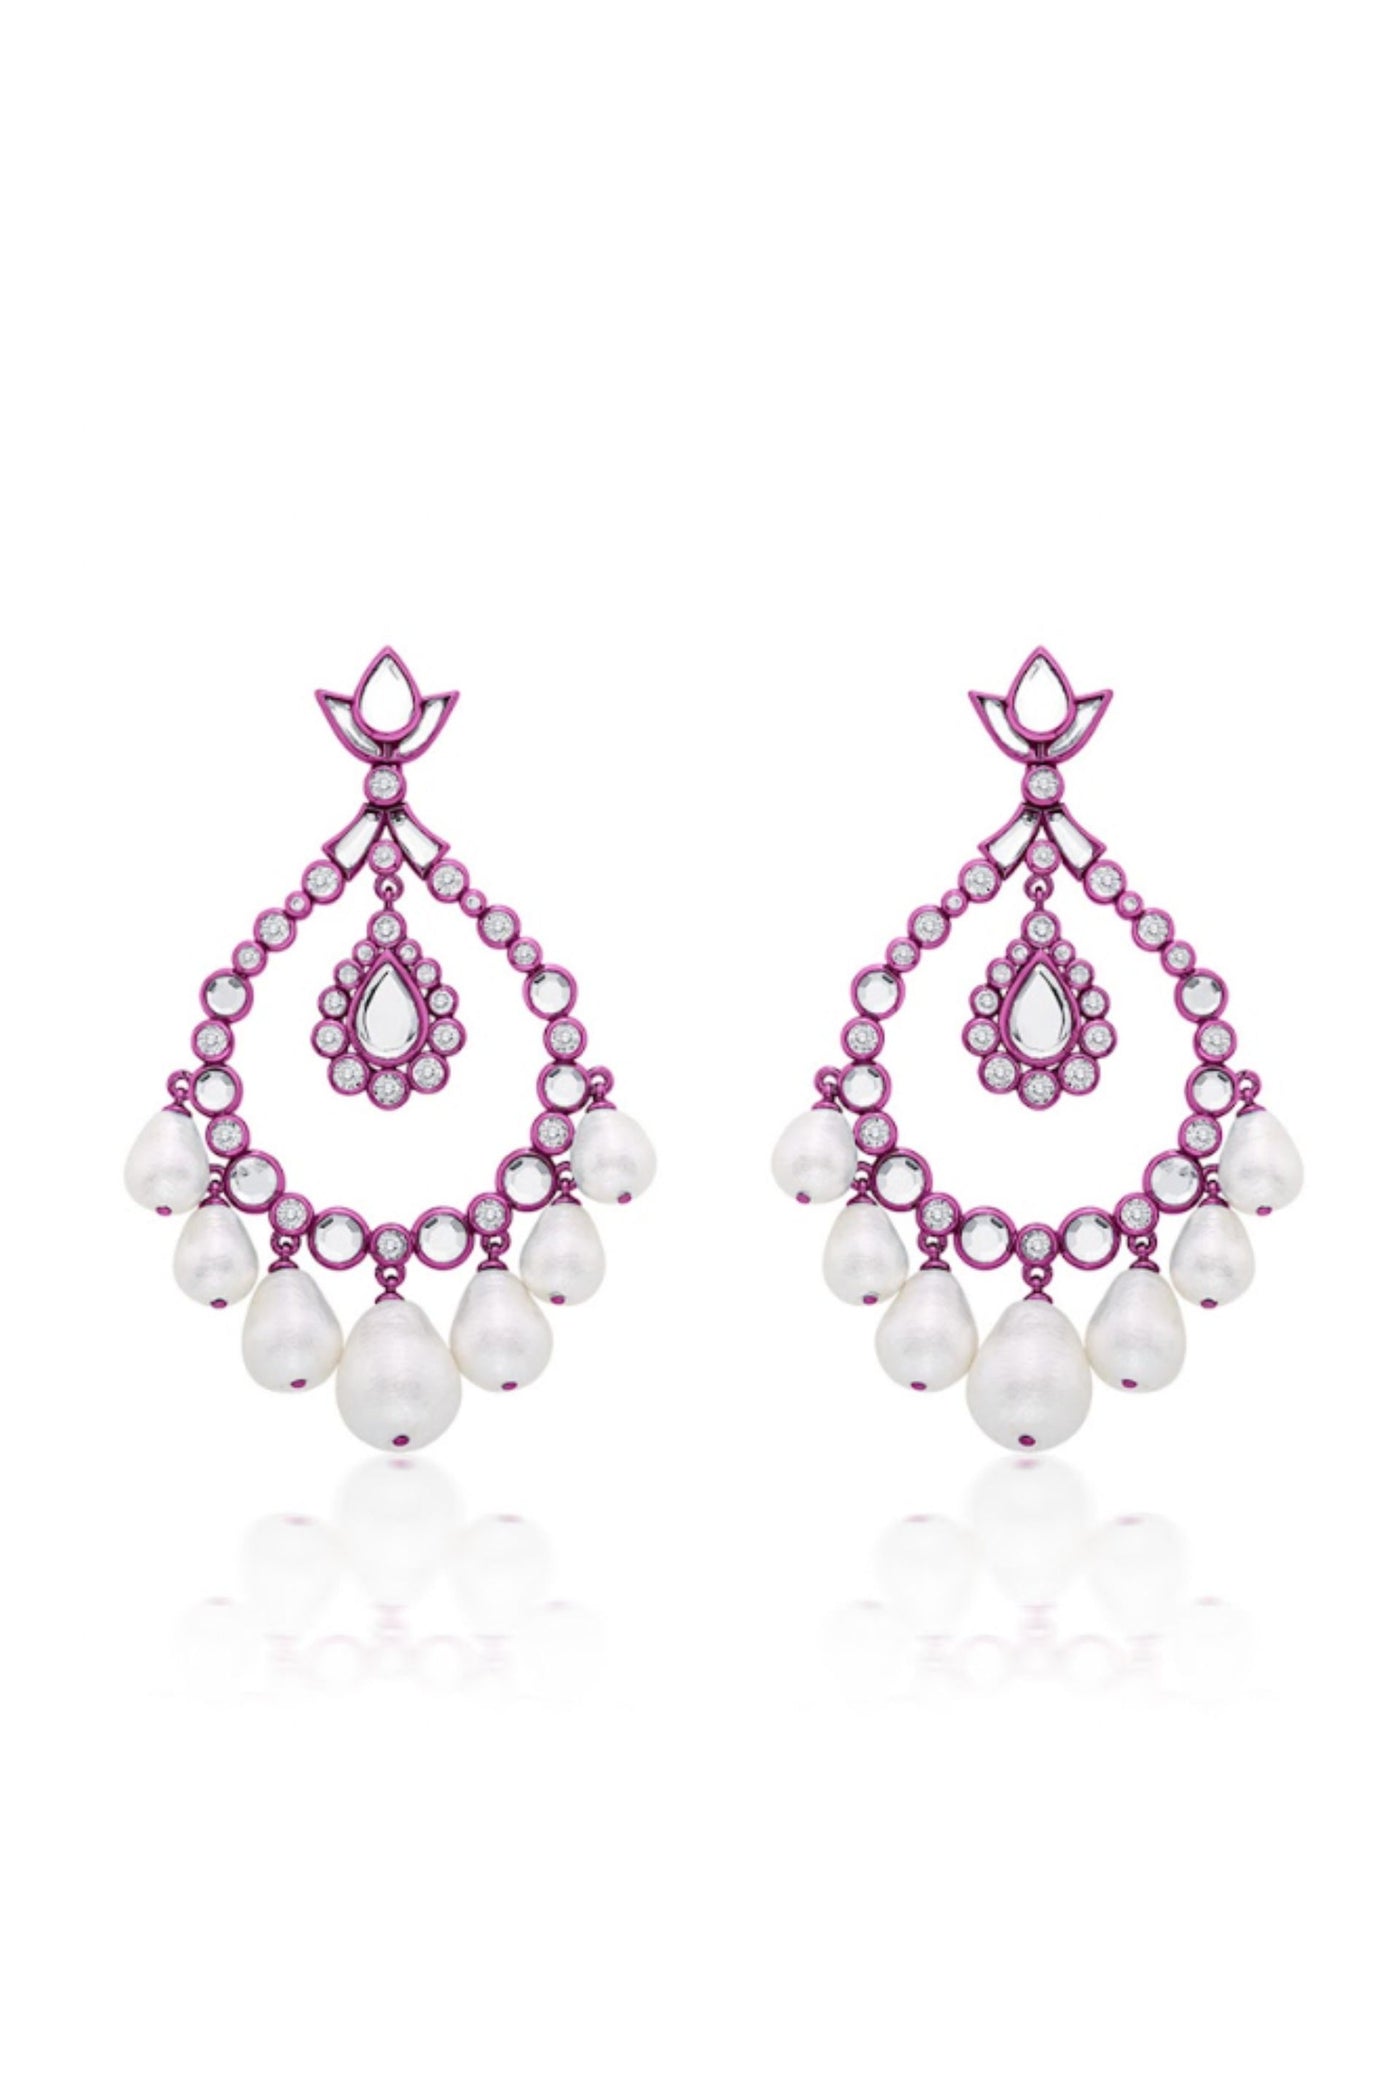 Isharya Rani Pink Elongated Crystal Pearl Earrings In Colored Plating jewellery indian designer wear online shopping melange singapore